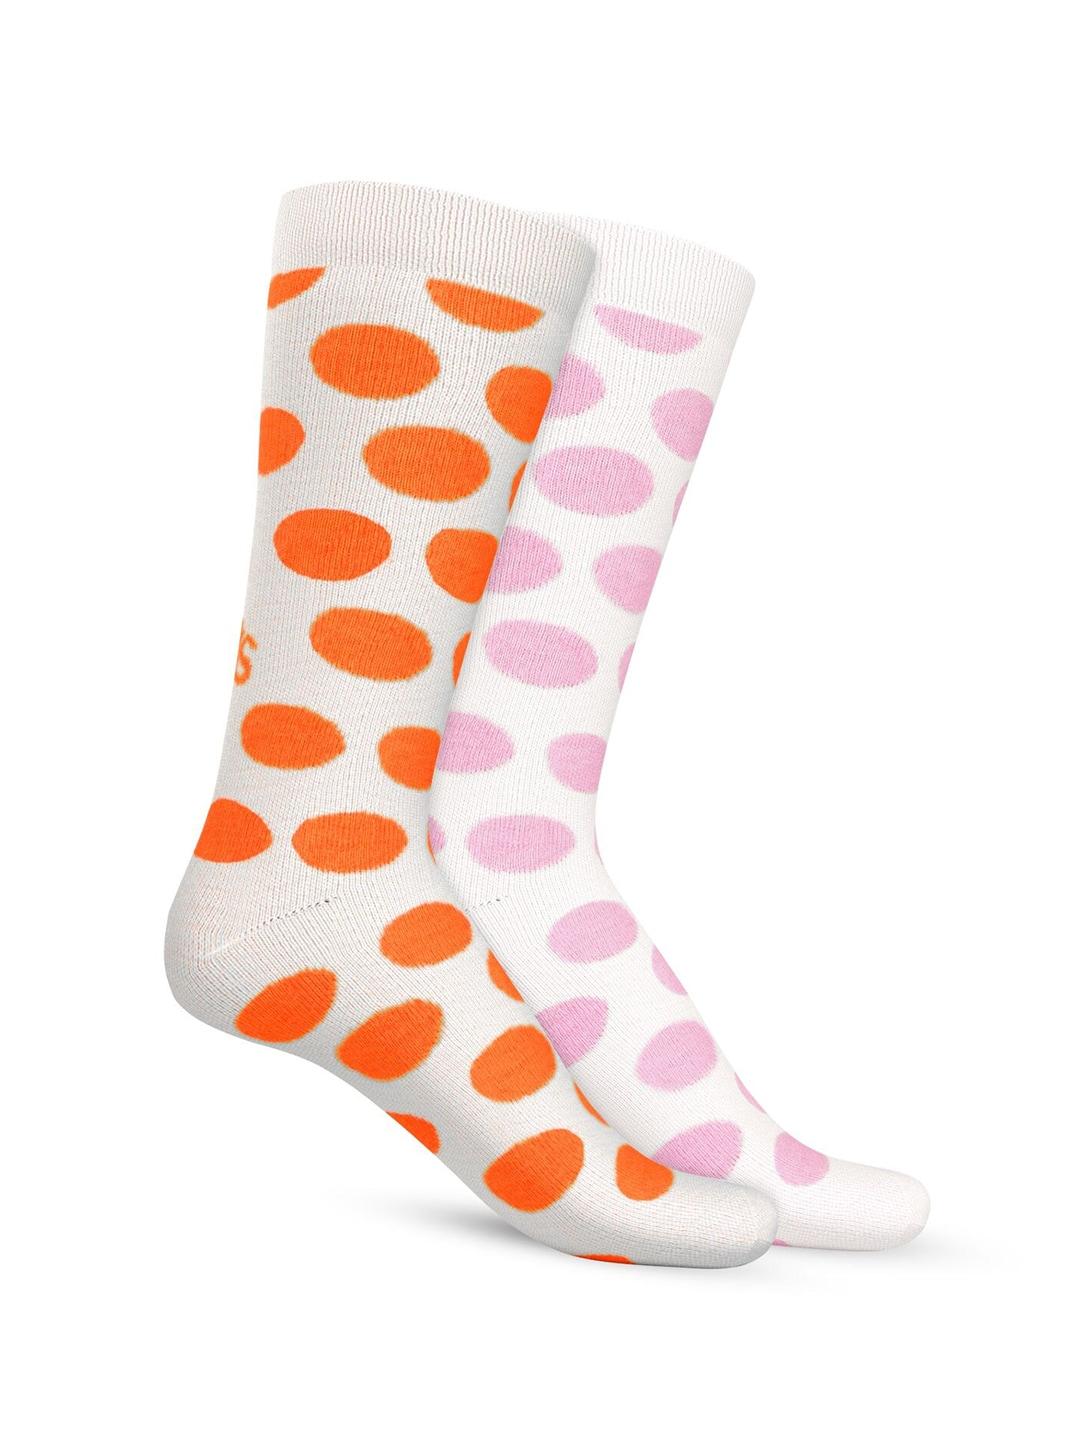 talkingsox unisex pack of 2 patterned durable moisture wicking calf length socks